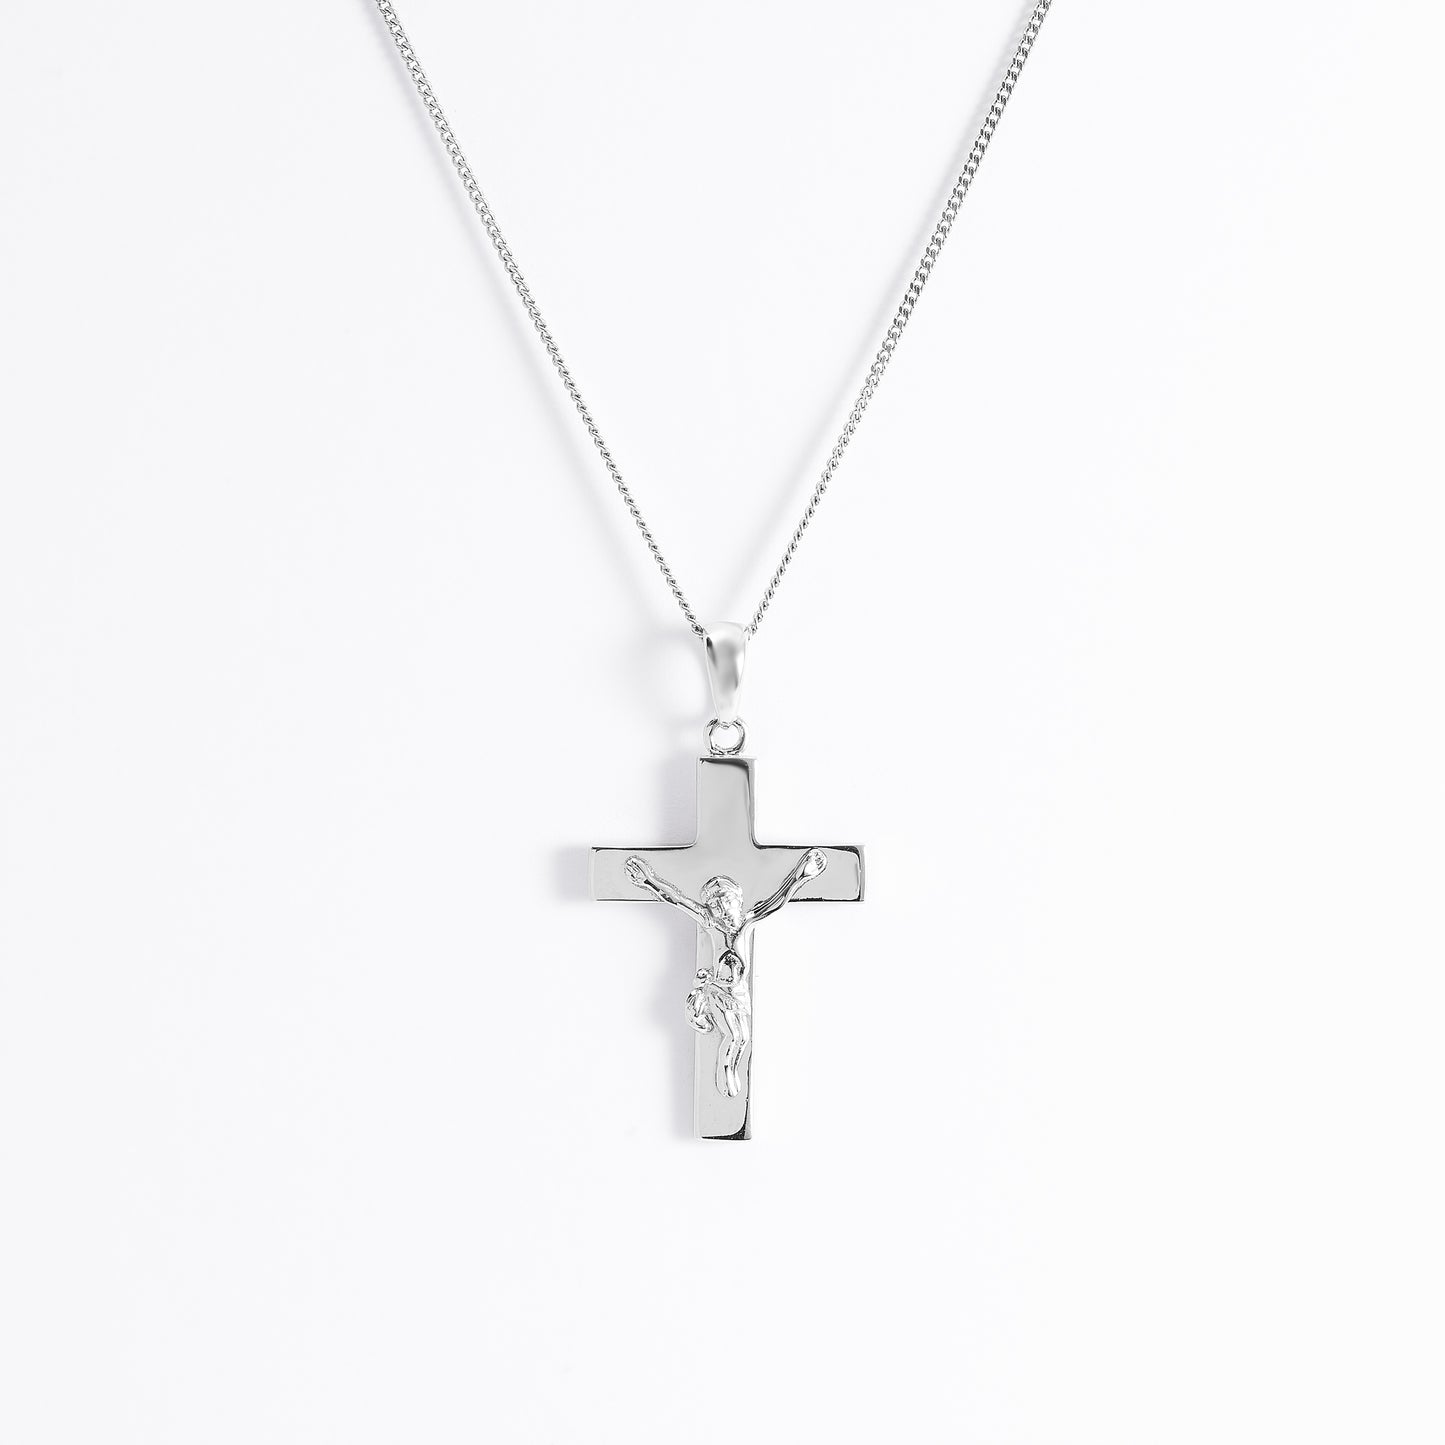 Sterling Silver Crucifix Pendant 17x25mm